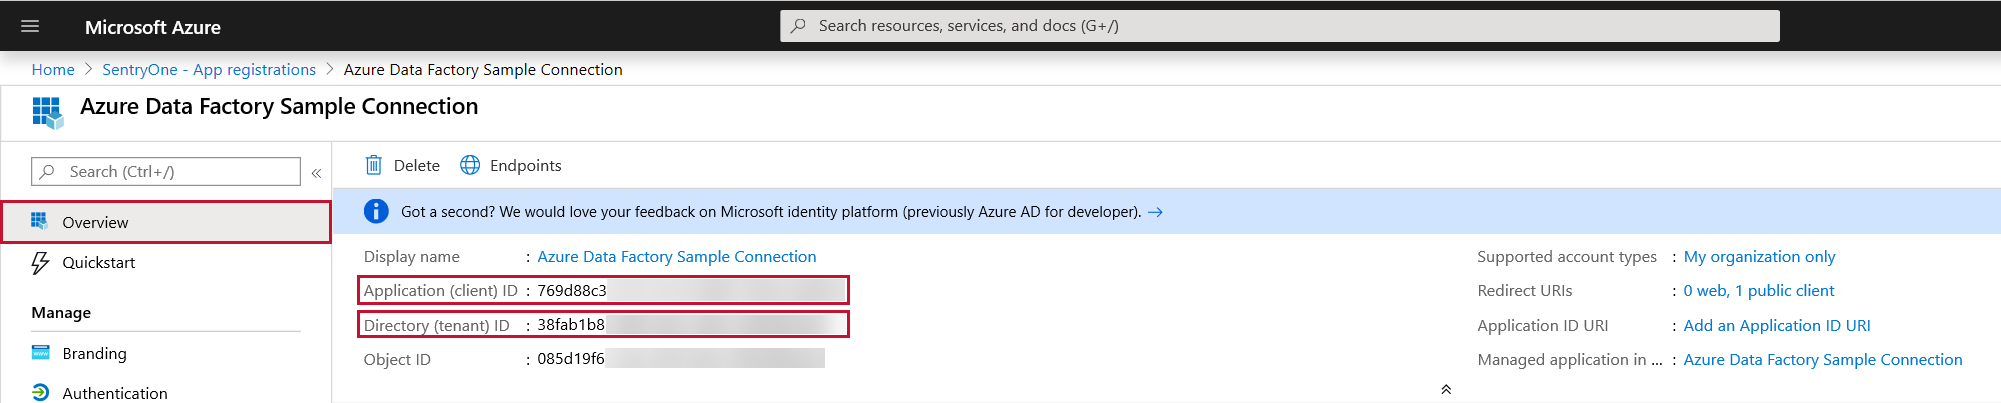 Azure ADF App Overview example